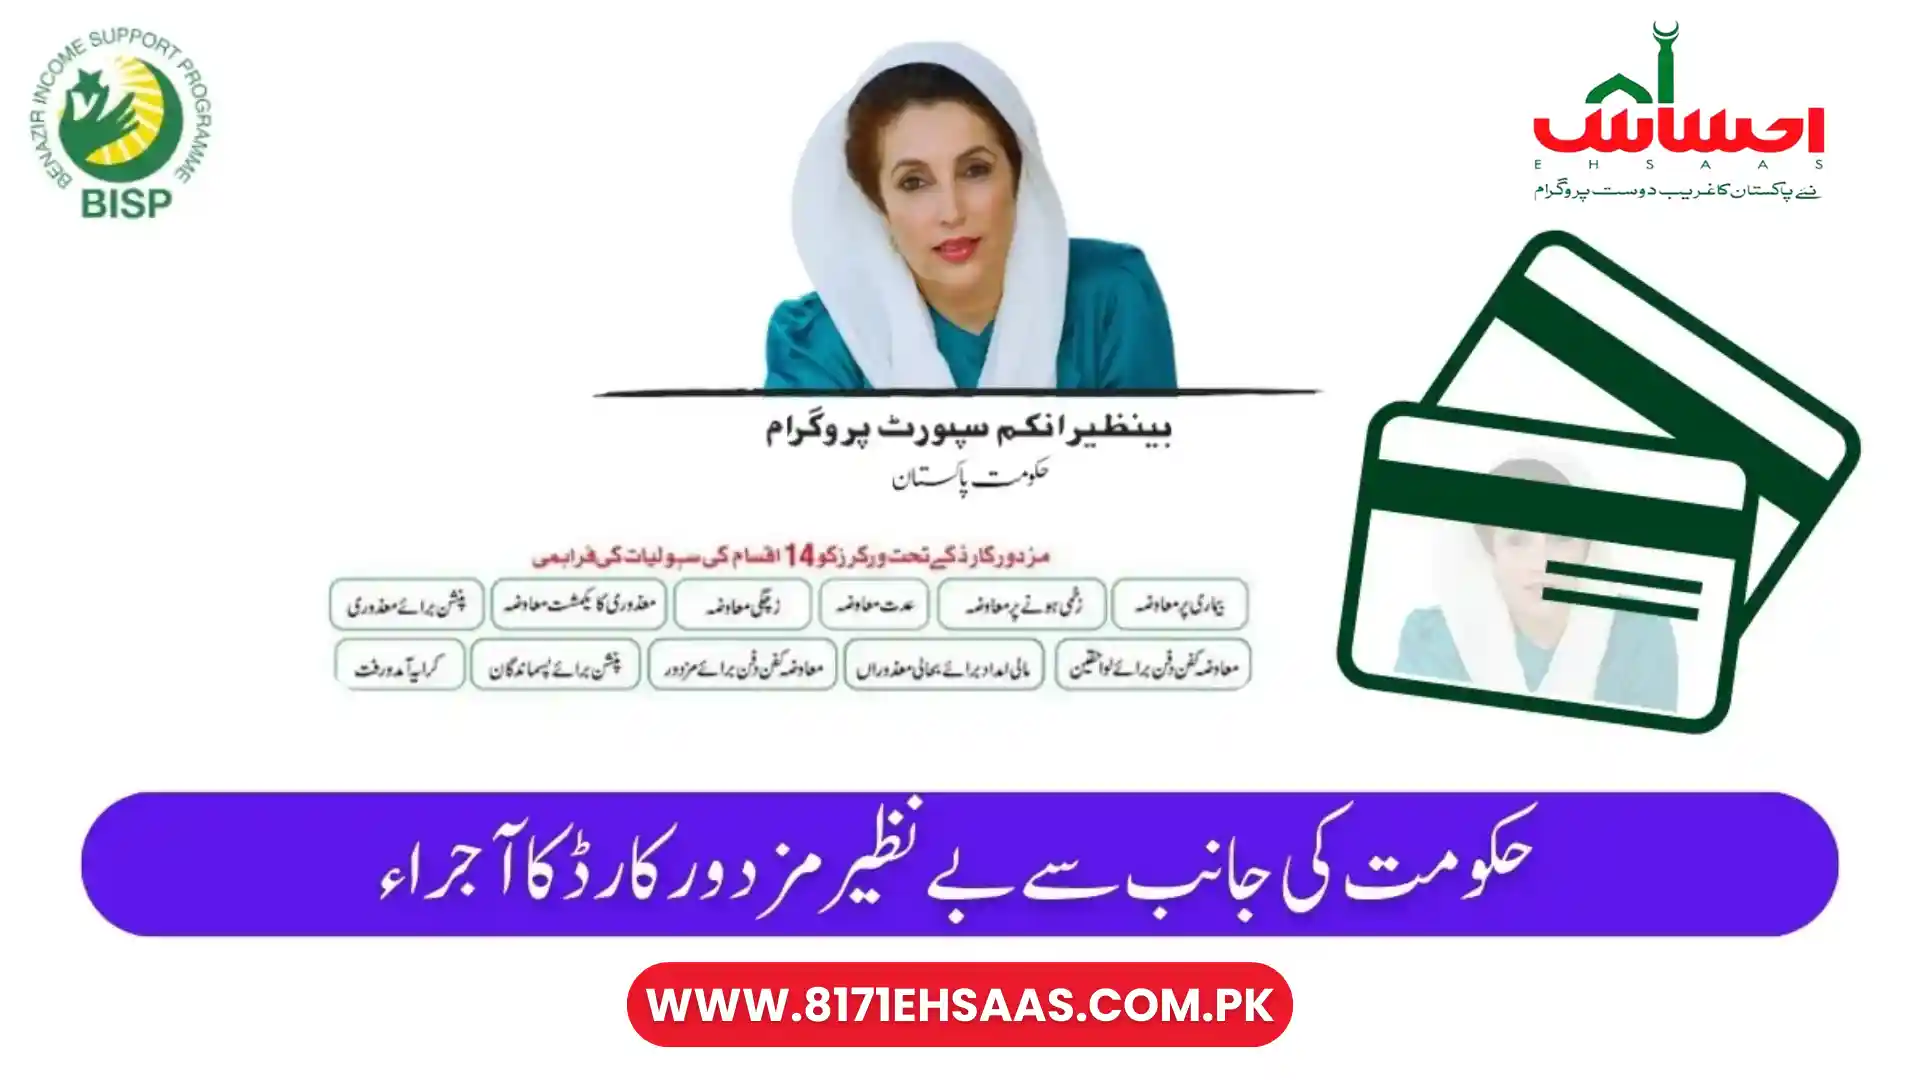 Benazir Income Support Program Launched Mazdoor Card